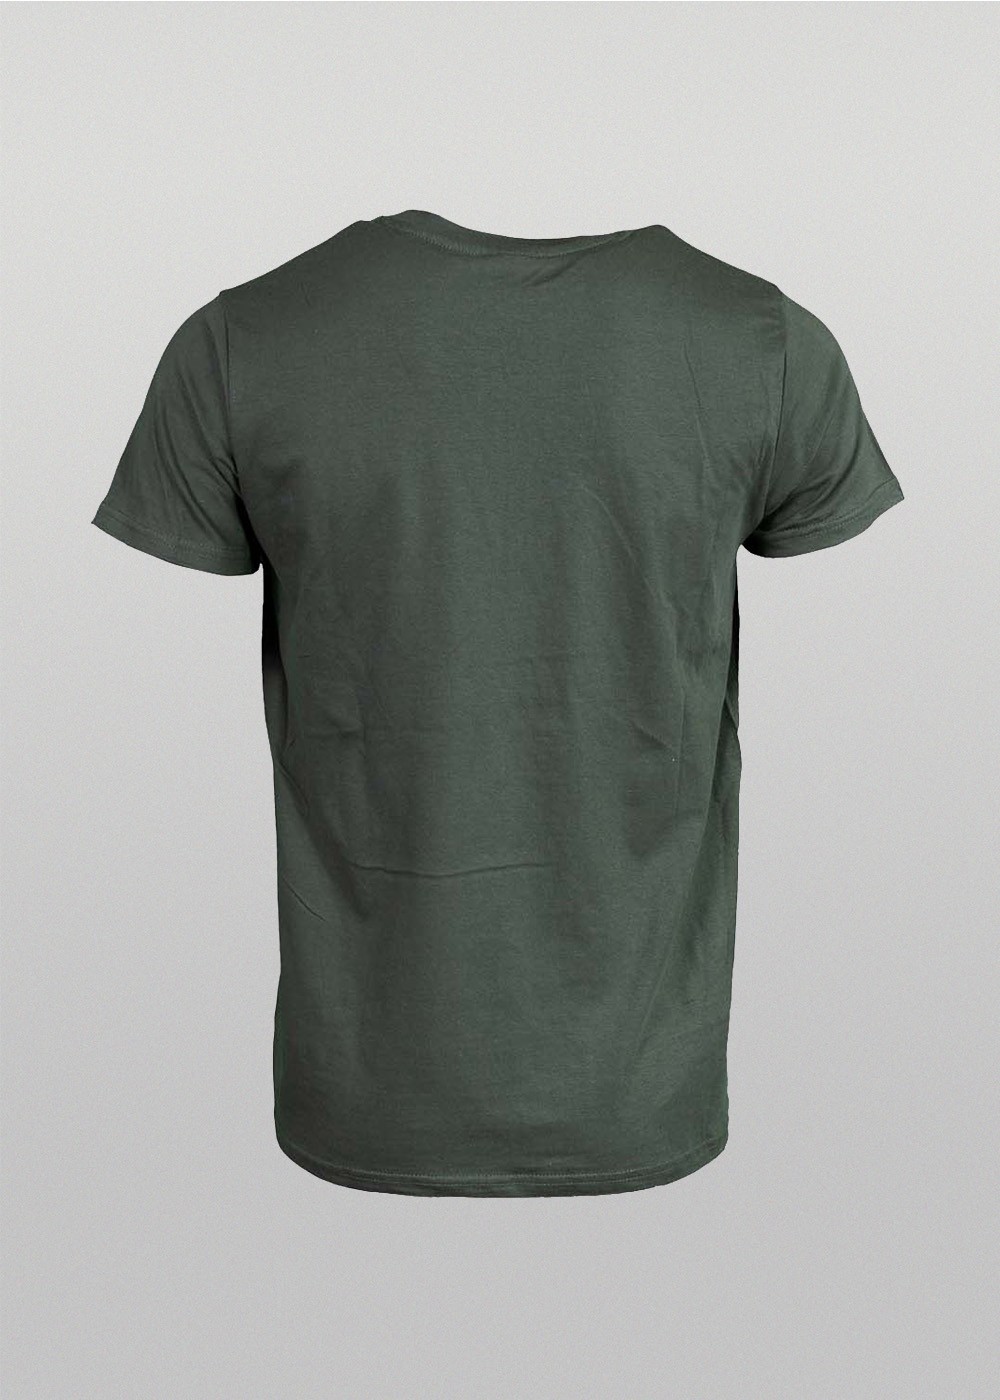 Premium Unisex T-shirt Urban Khaki